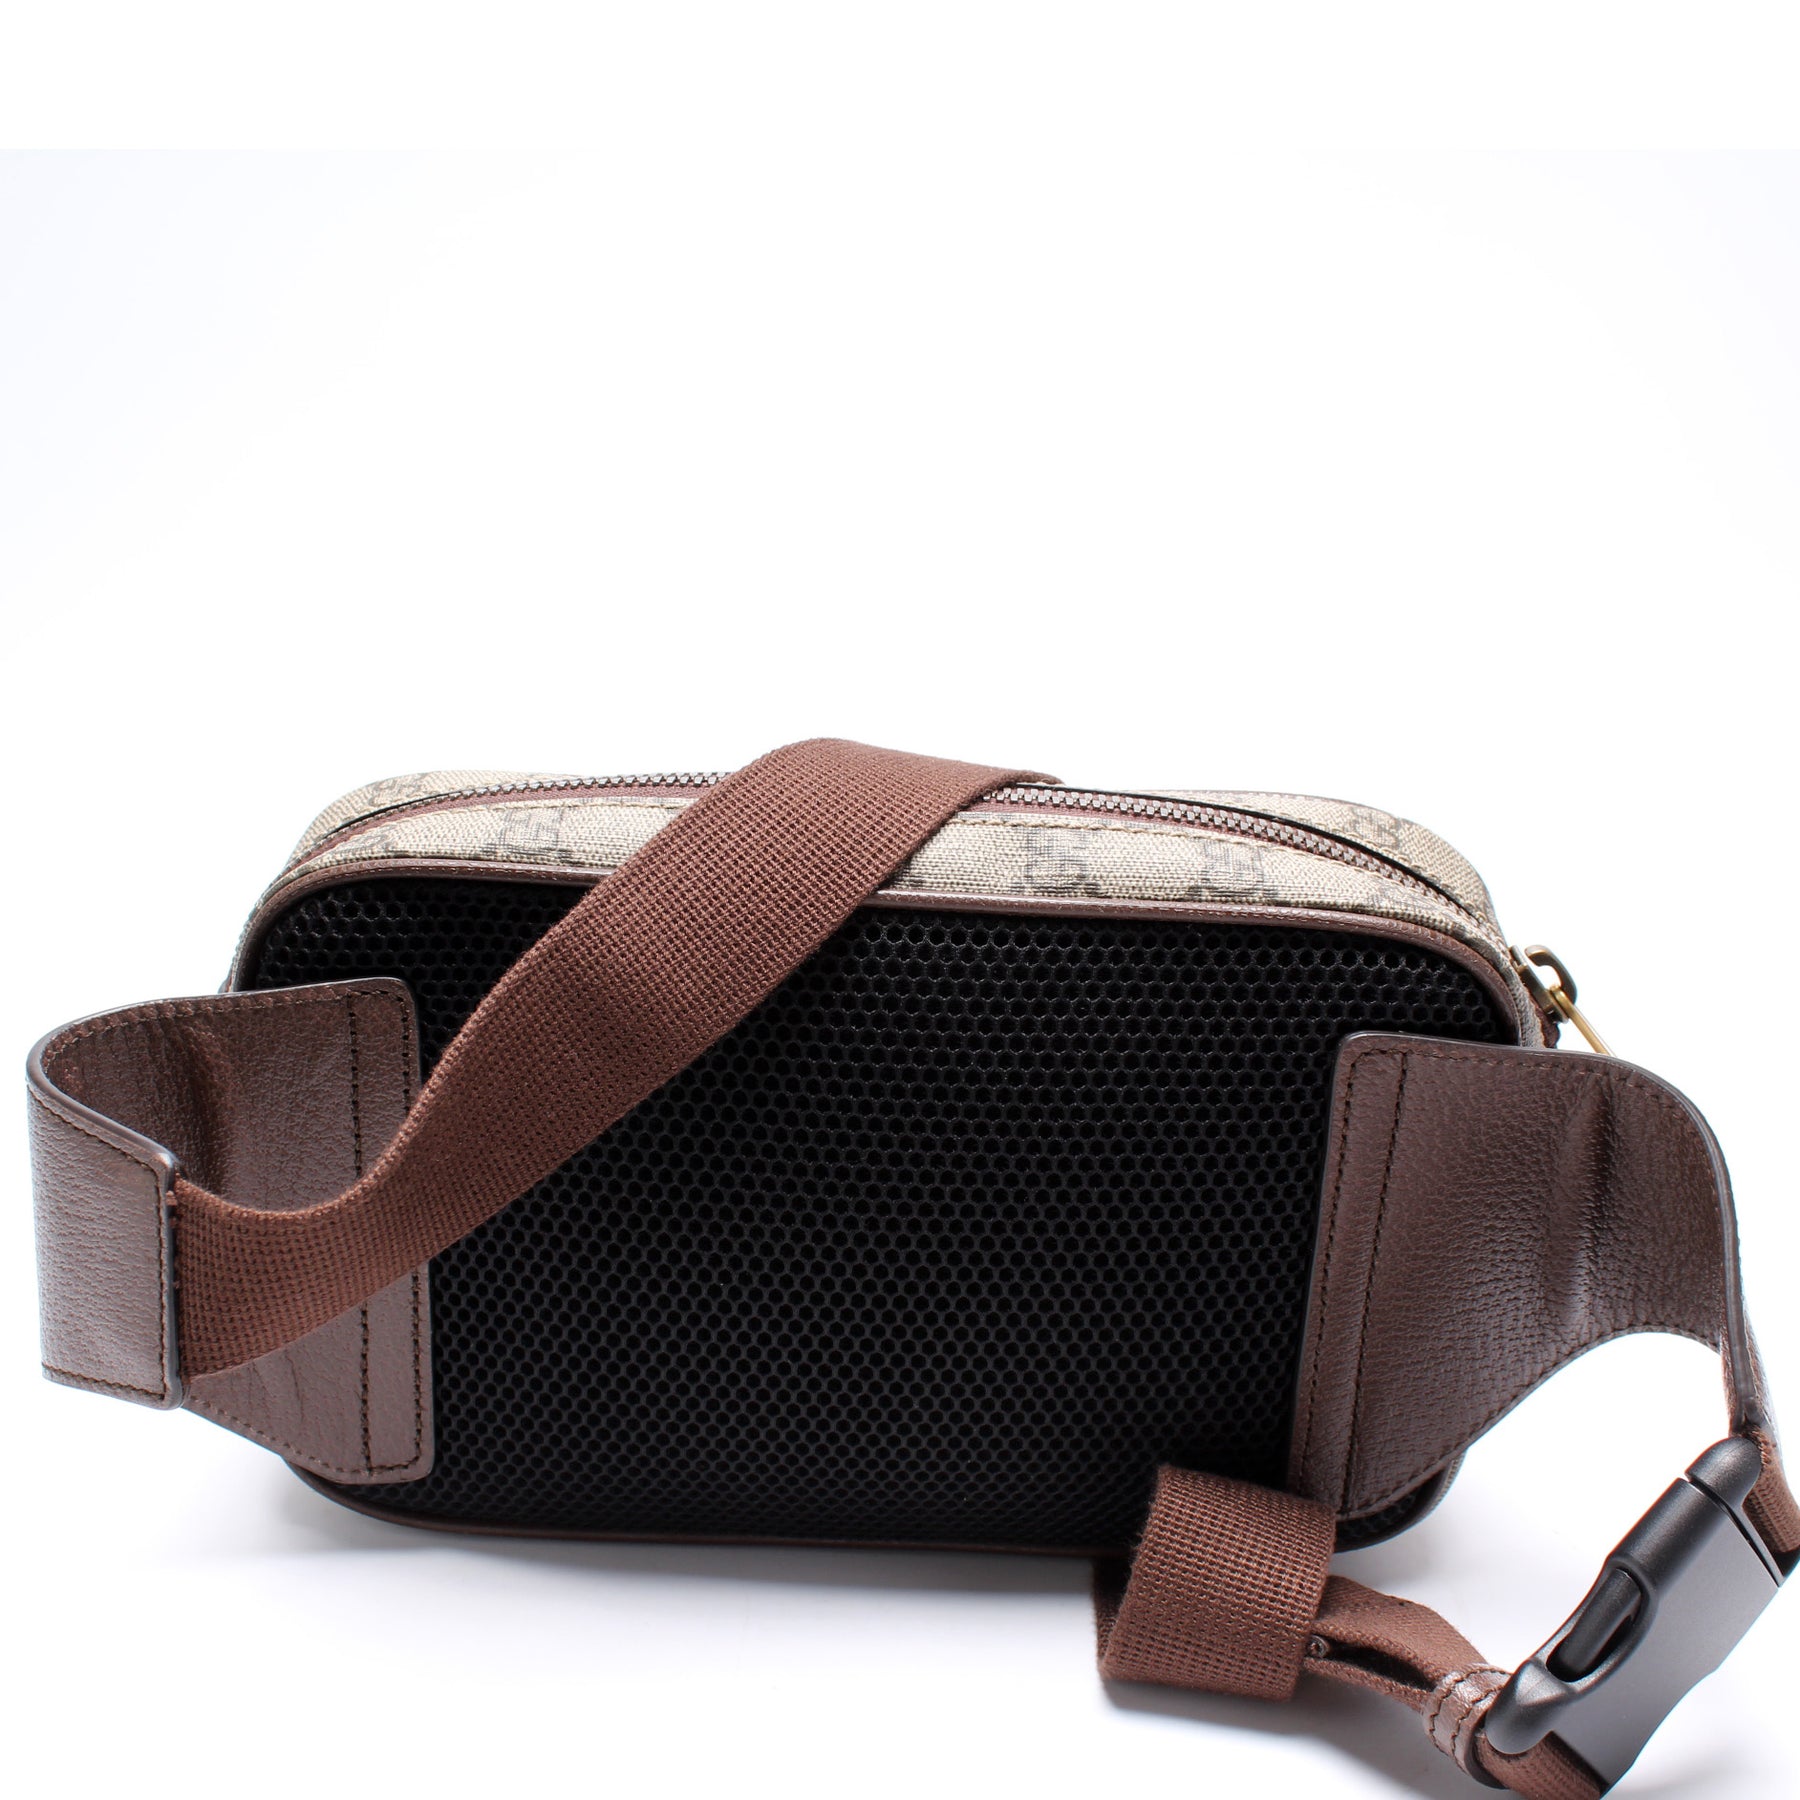 New Gucci Ophidia Belt Fanny Bag, Black Patent Leather&Suede Dustbag  Detach Belt